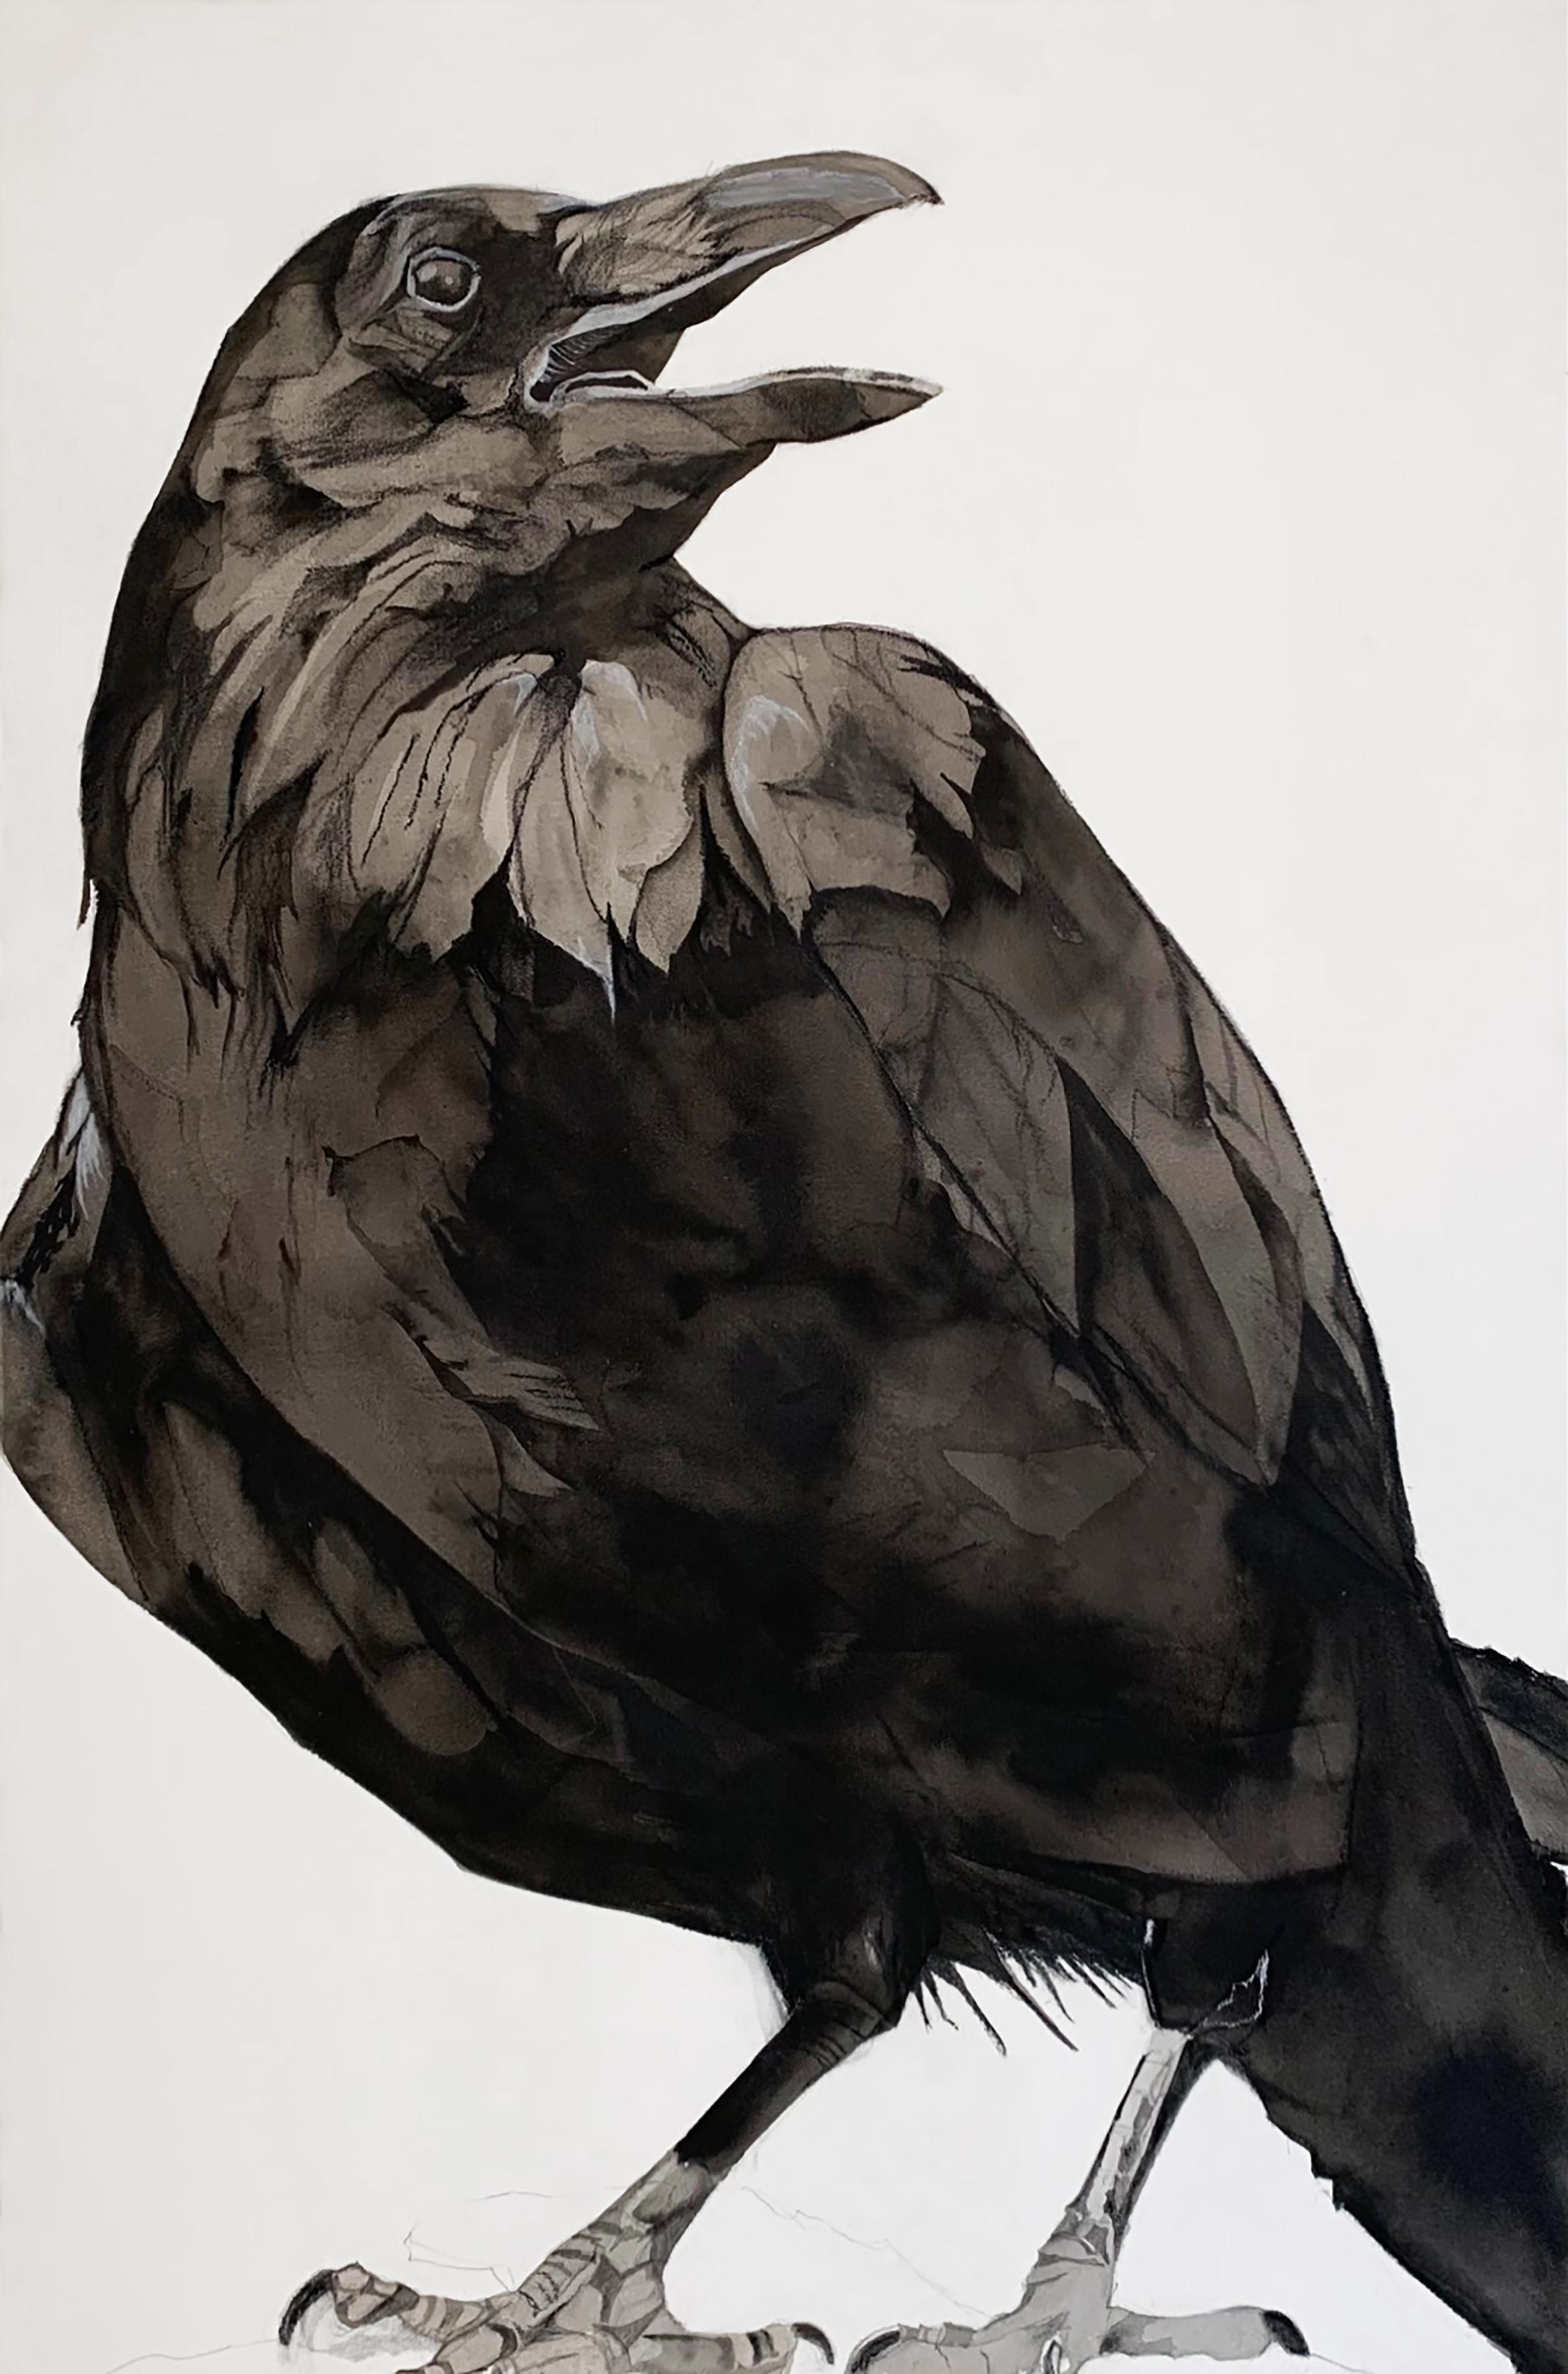 Heather Lancaster Animal Art - "Call" - Raven Portrait - Large Scale Animal Drawing - Audubon - Durer